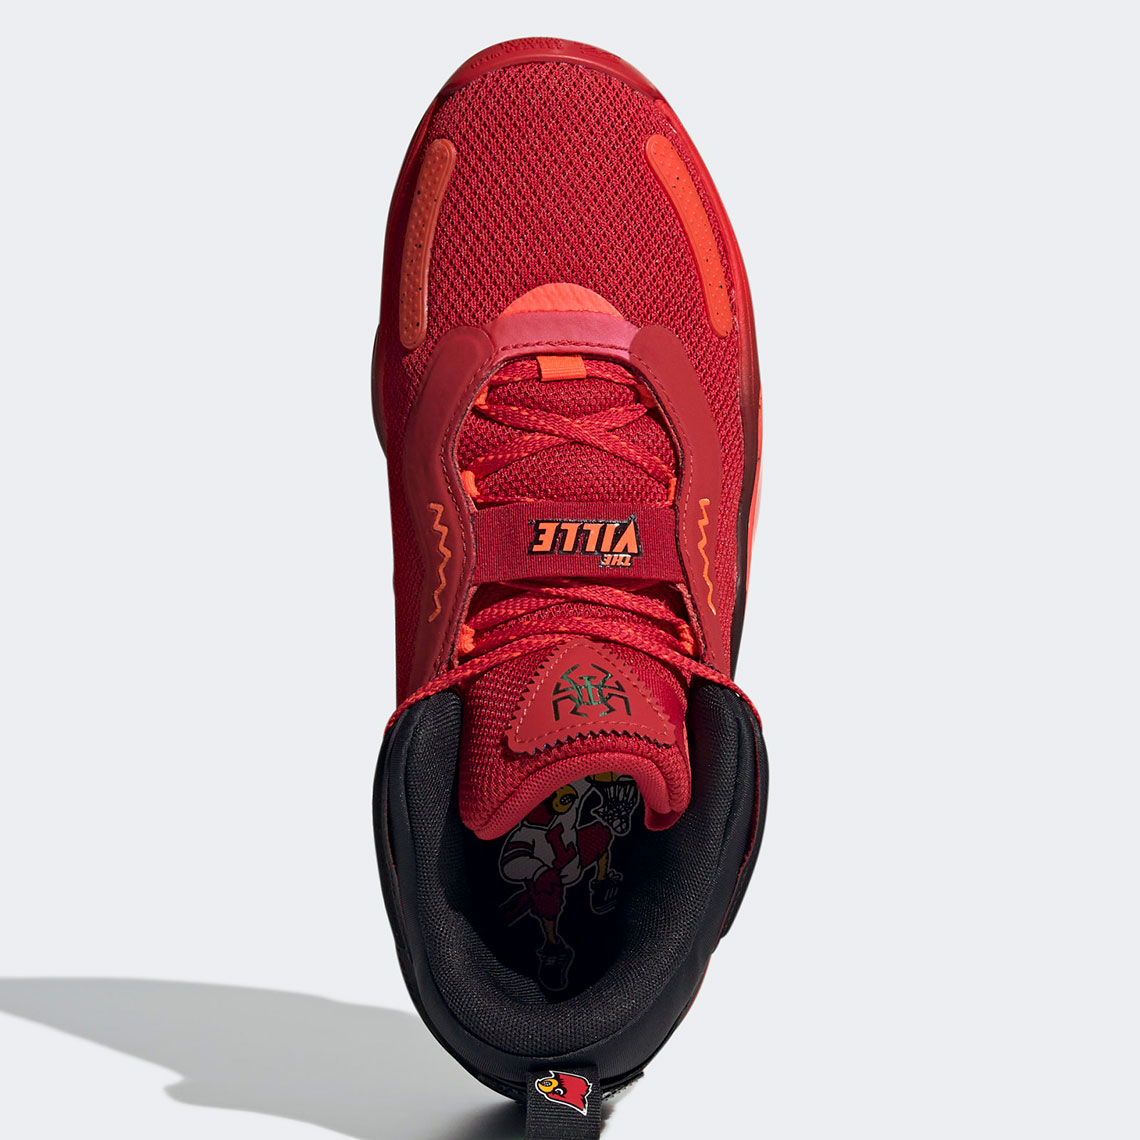 Adidas Dame 7 EXTPLY Louisville Cardinals Basketball Shoes Men 13 Red  GX3458 New